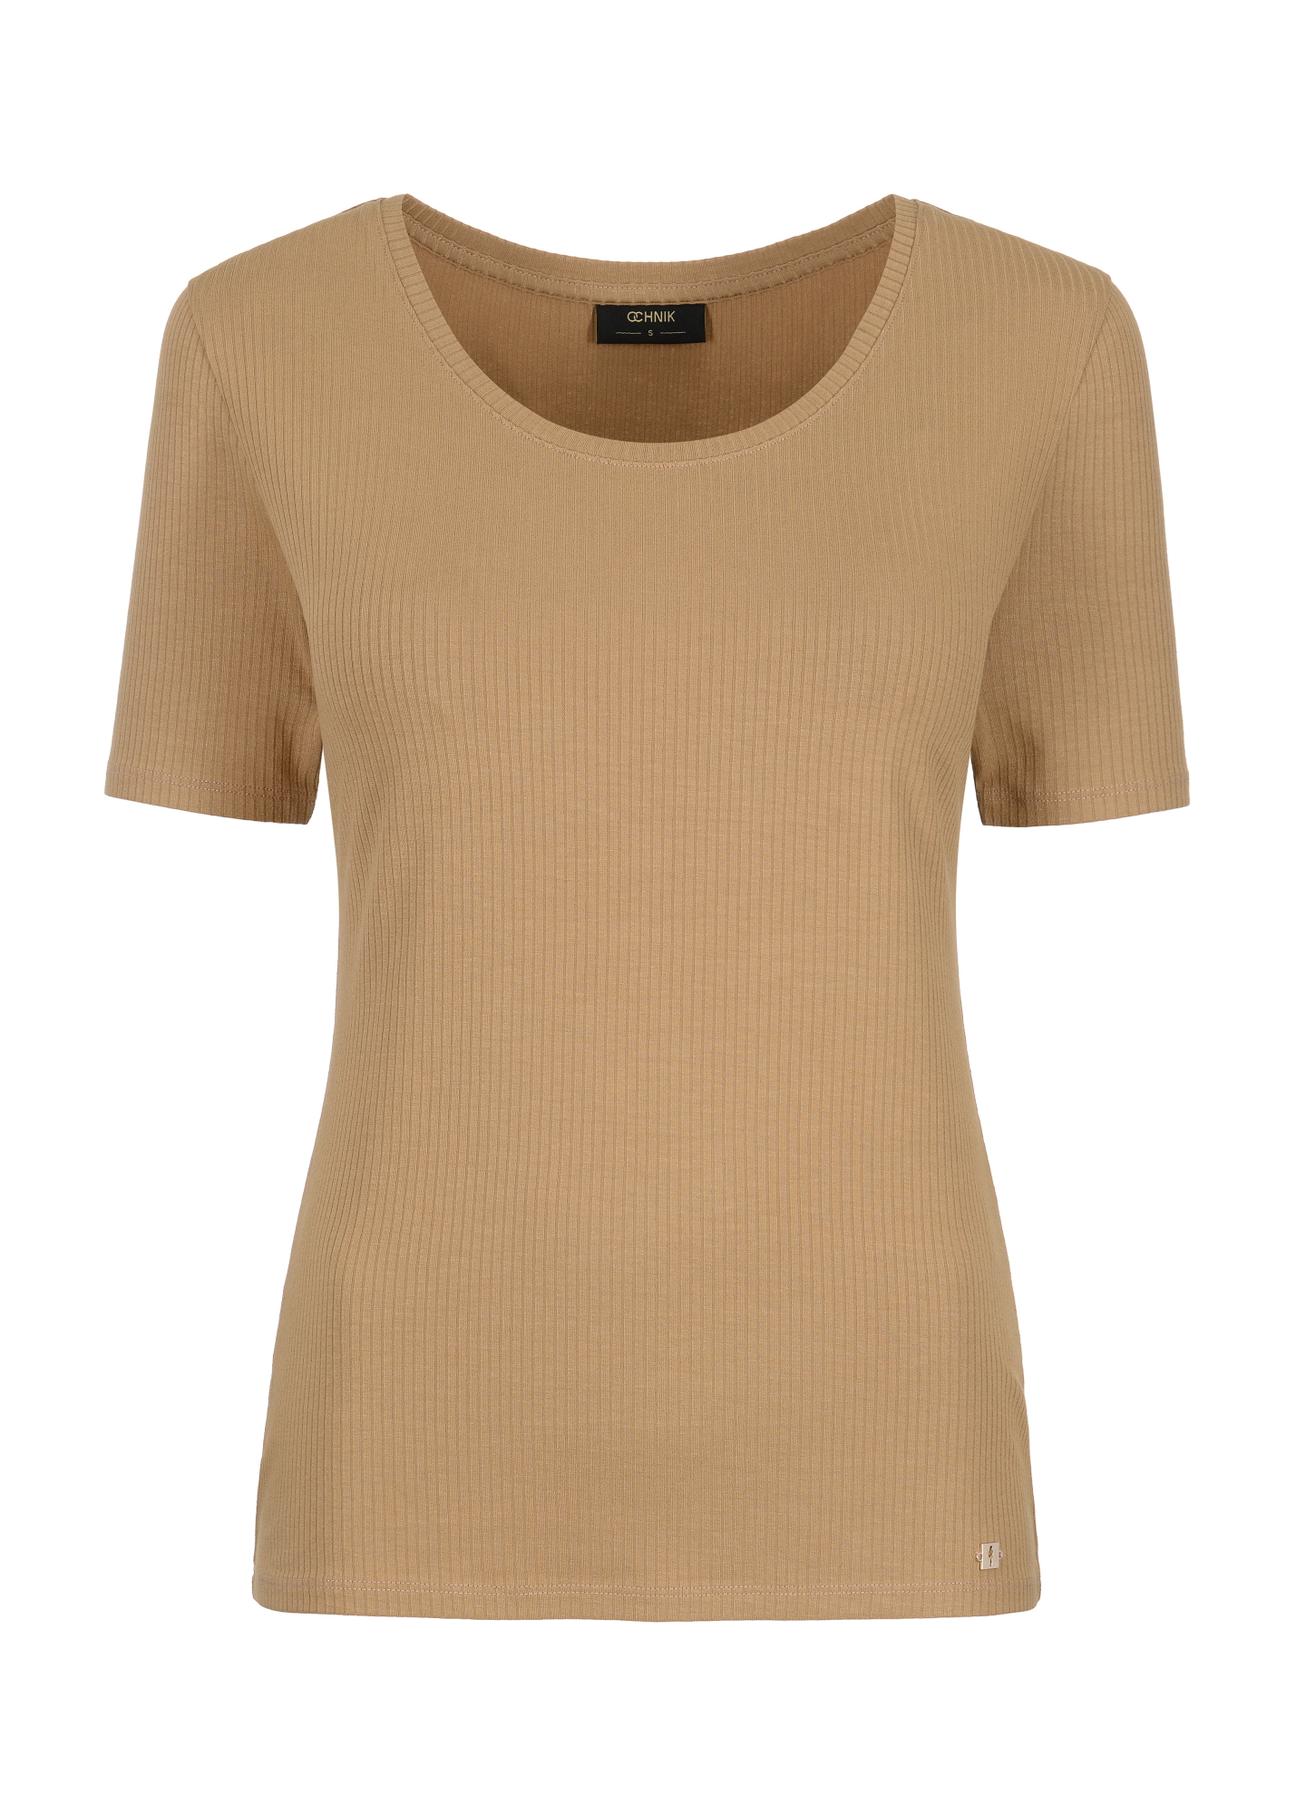 T-shirt brązowy damski basic TSHDT-0114-24(Z23)